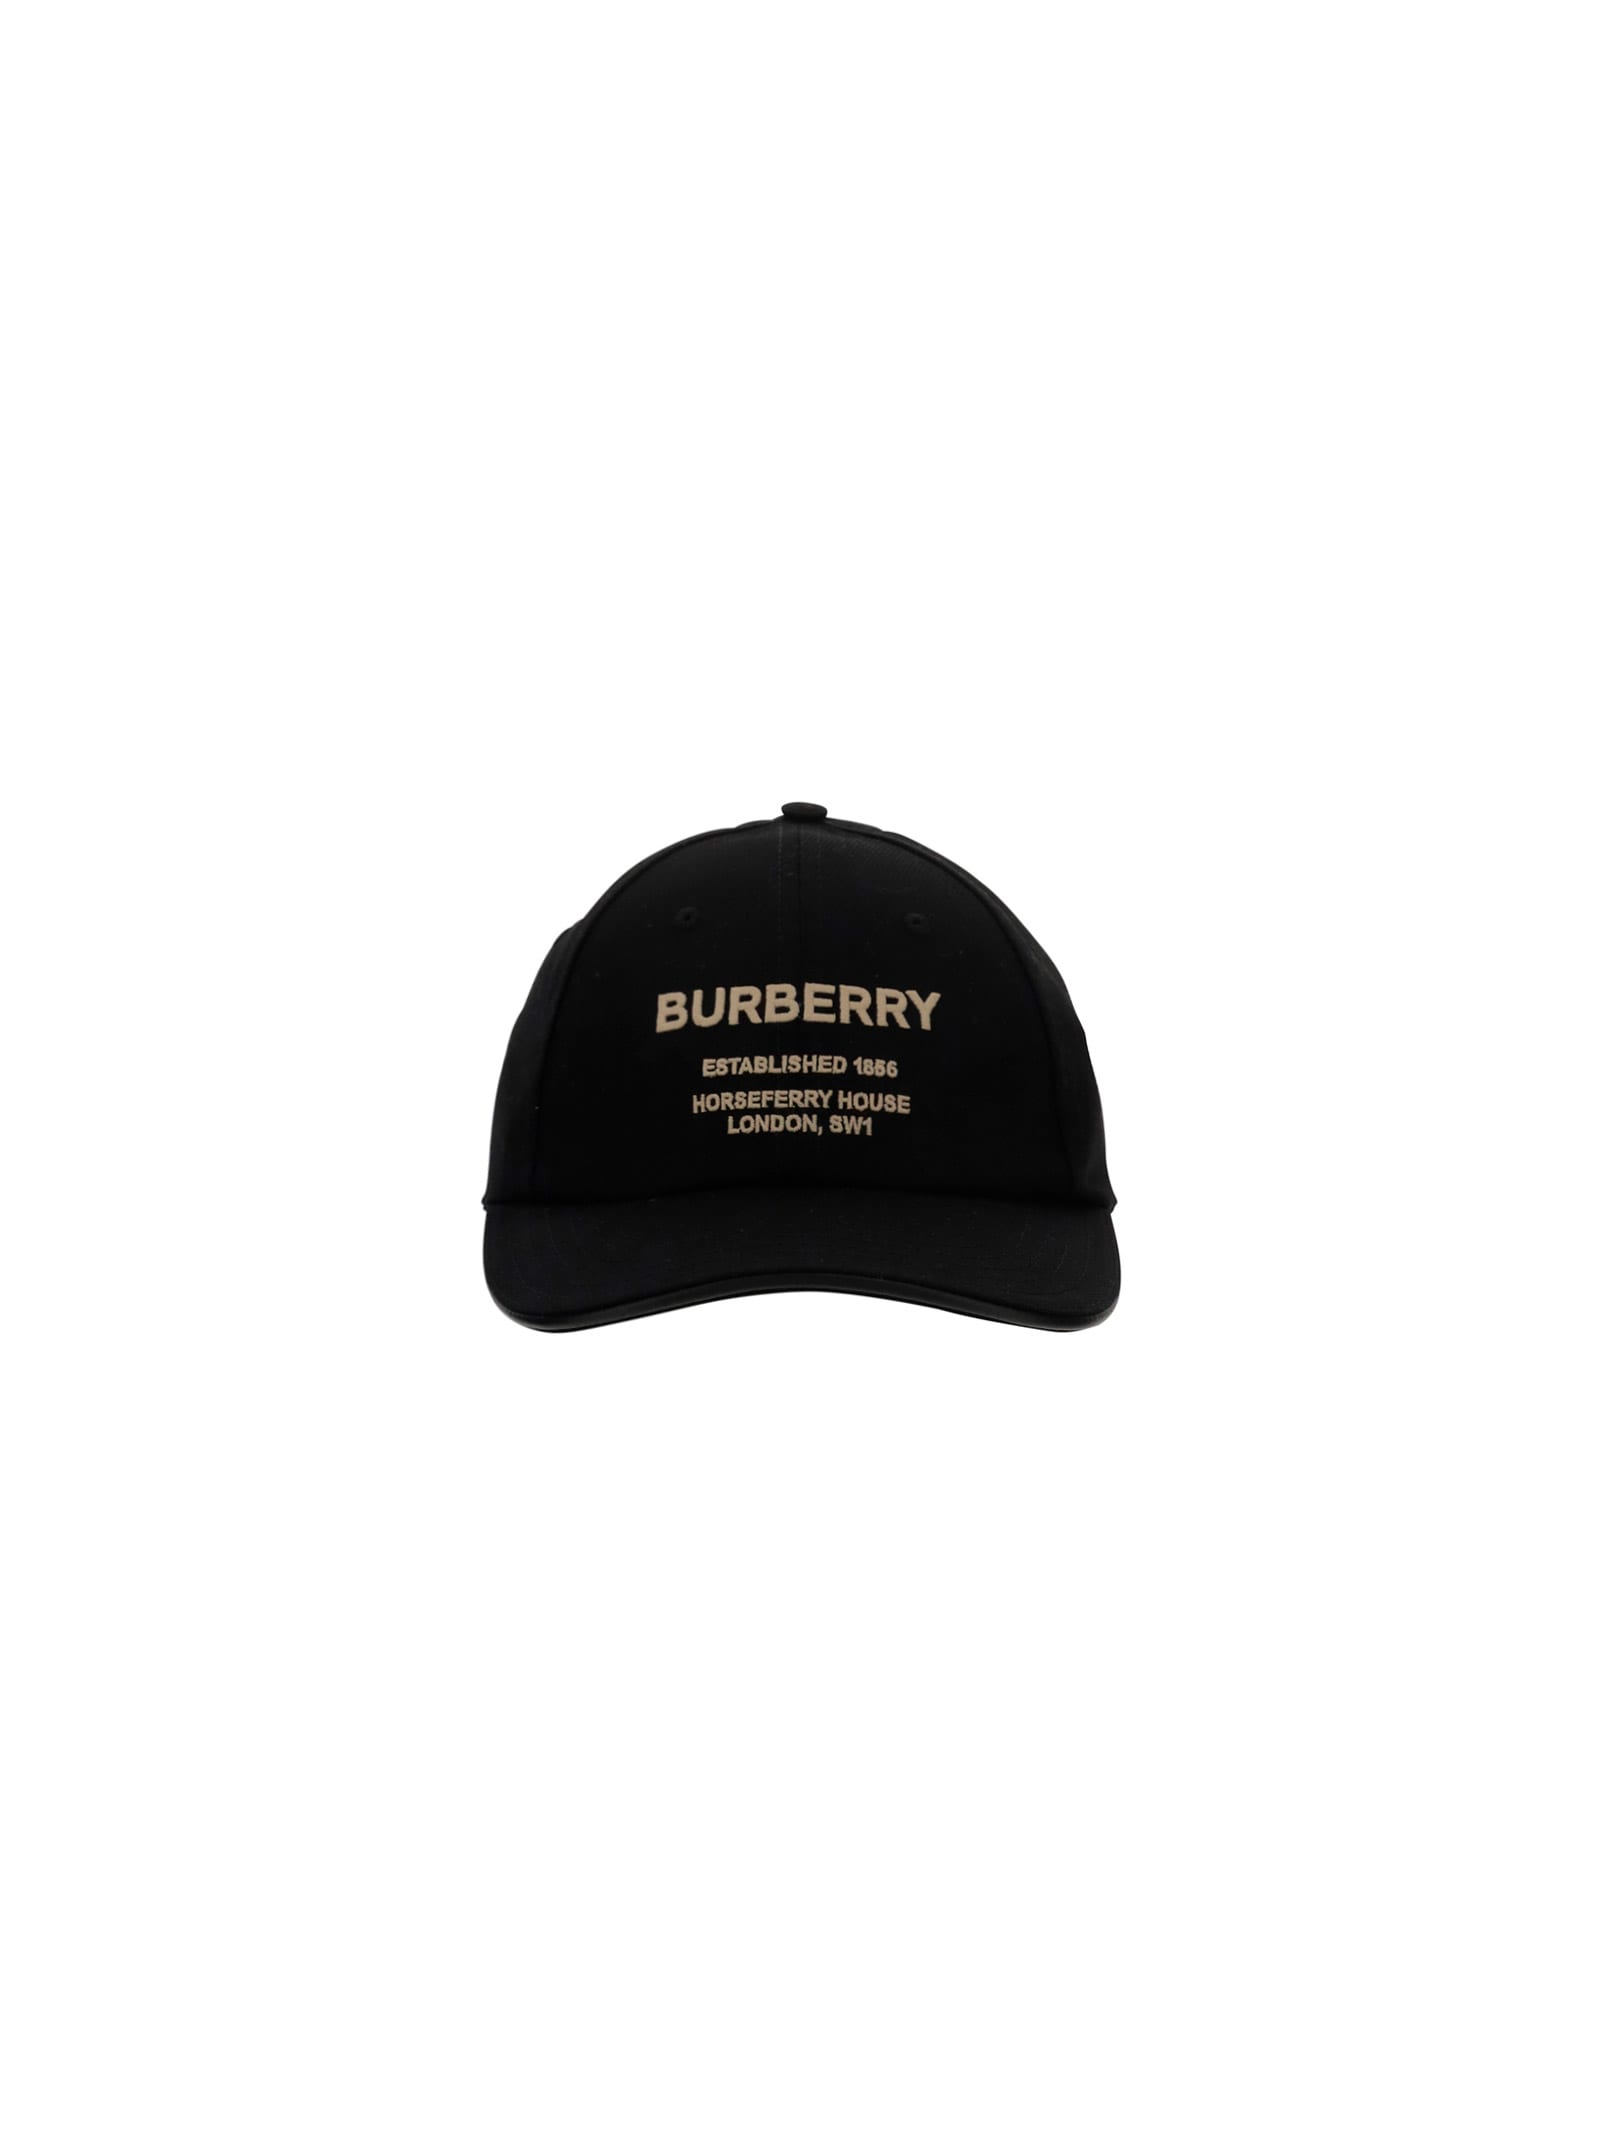 BURBERRY BASEBALL CAP